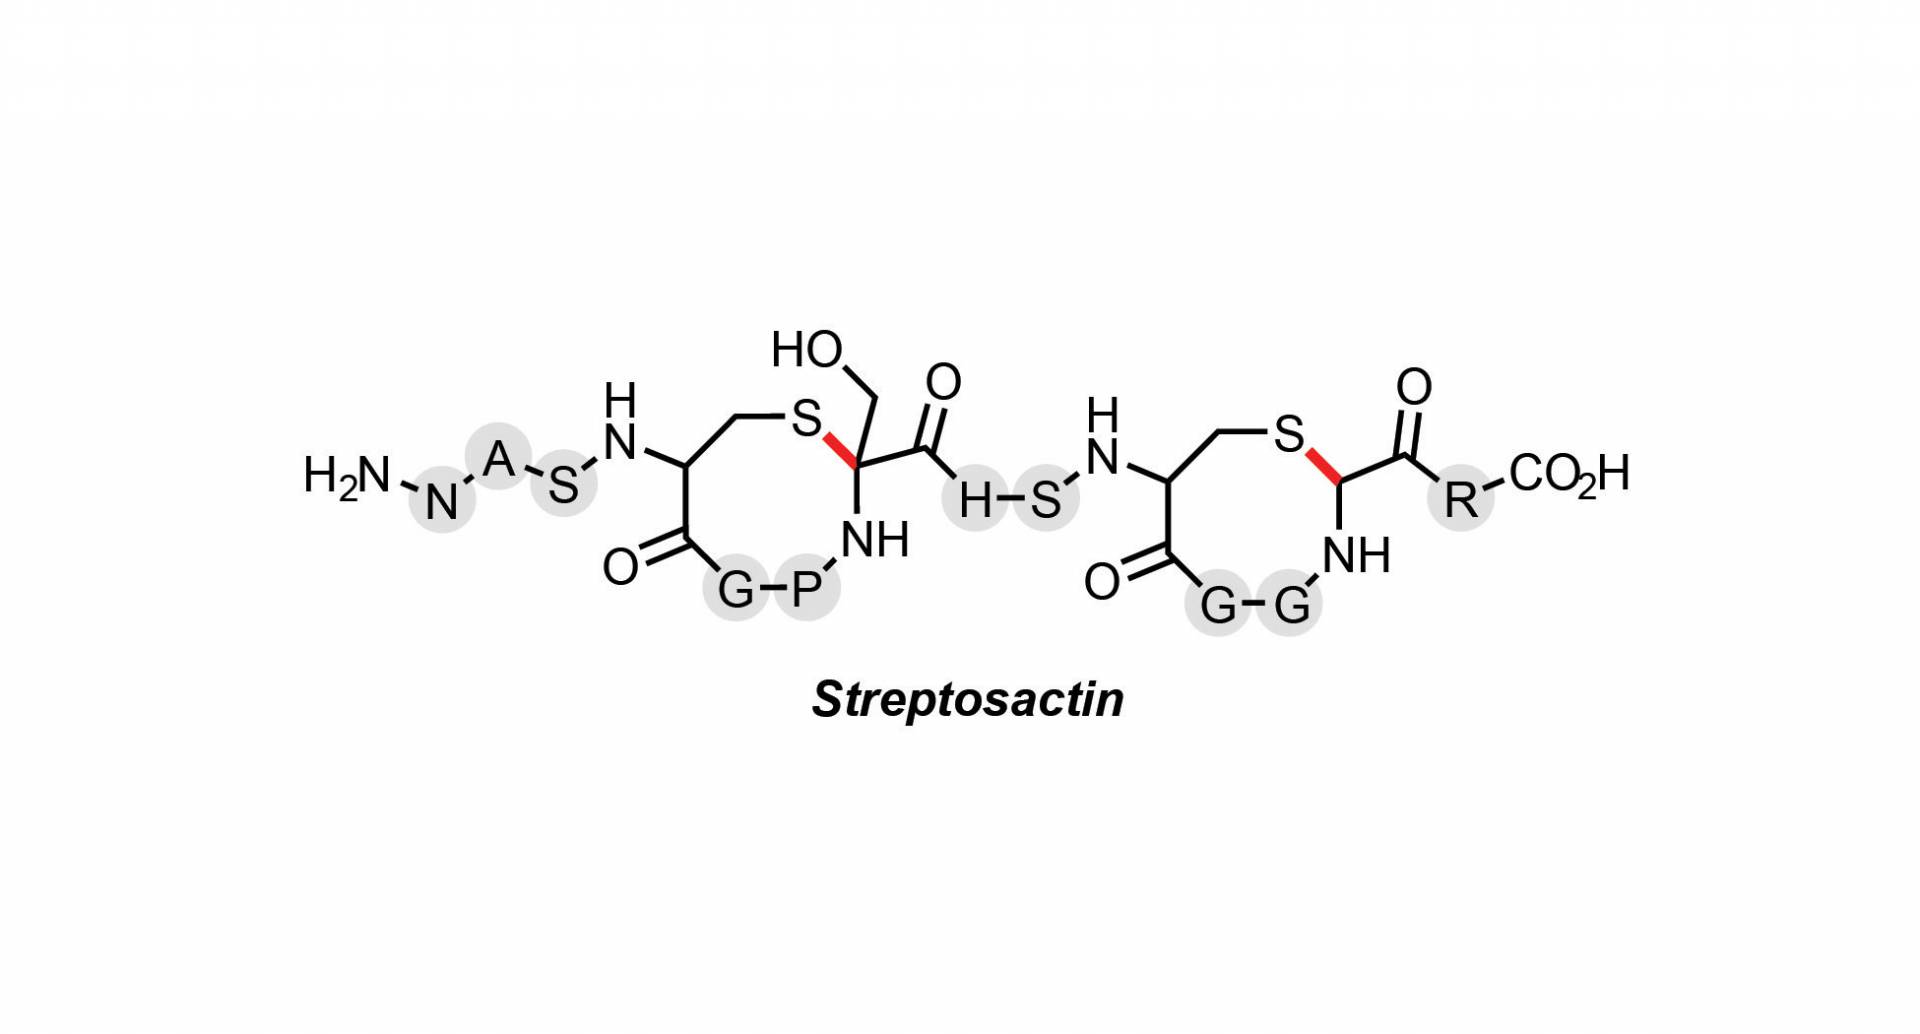 notation of the streptosactin molecule